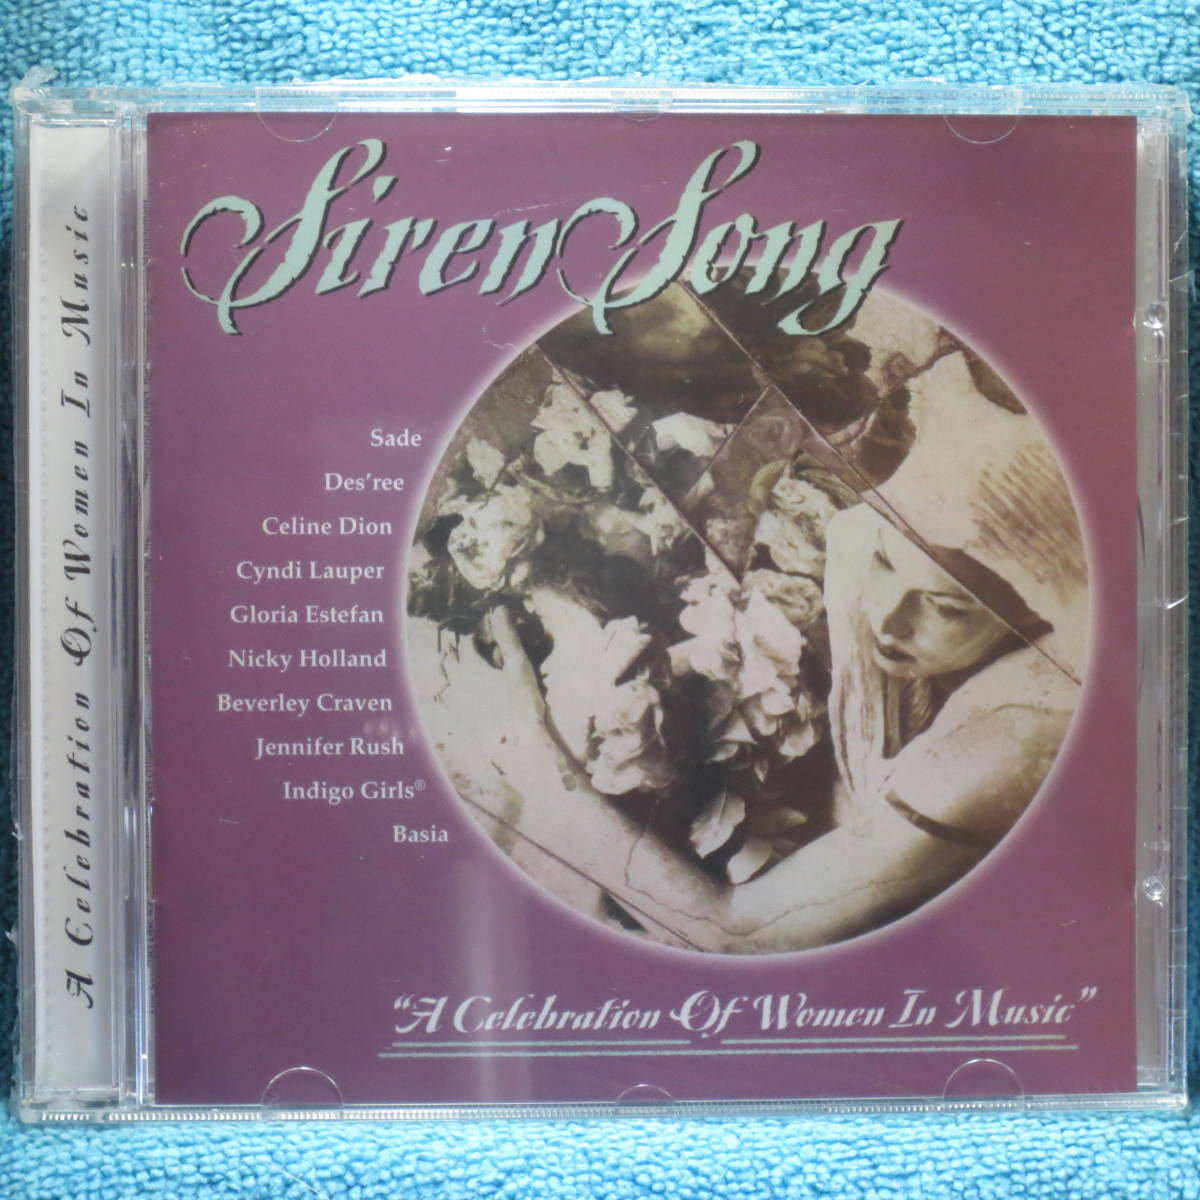 [新品未開封CD] Siren Song: A Celebration Of Women In Music (輸入盤)_画像1